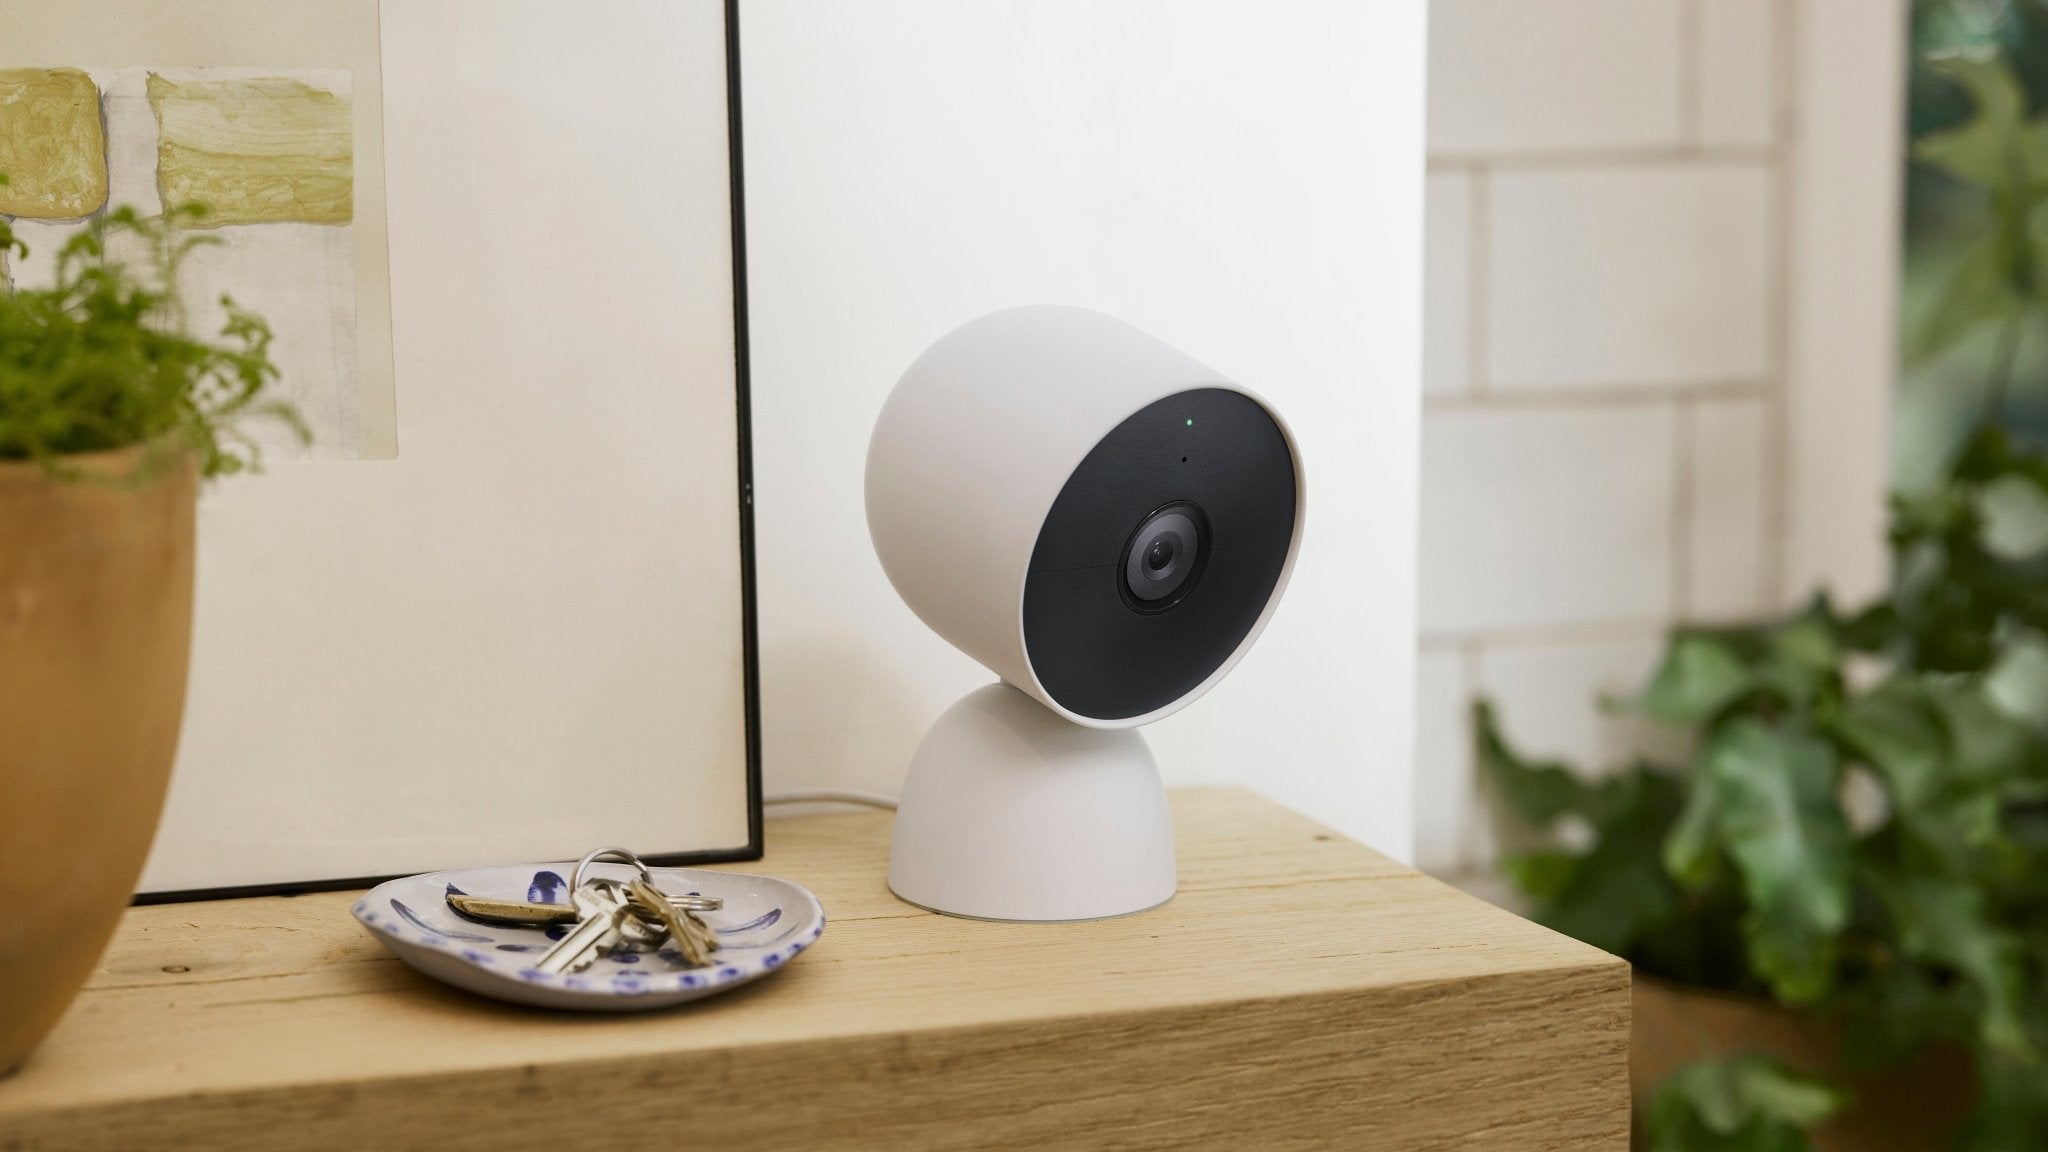 The Google Nest Cam placed on a shelf.